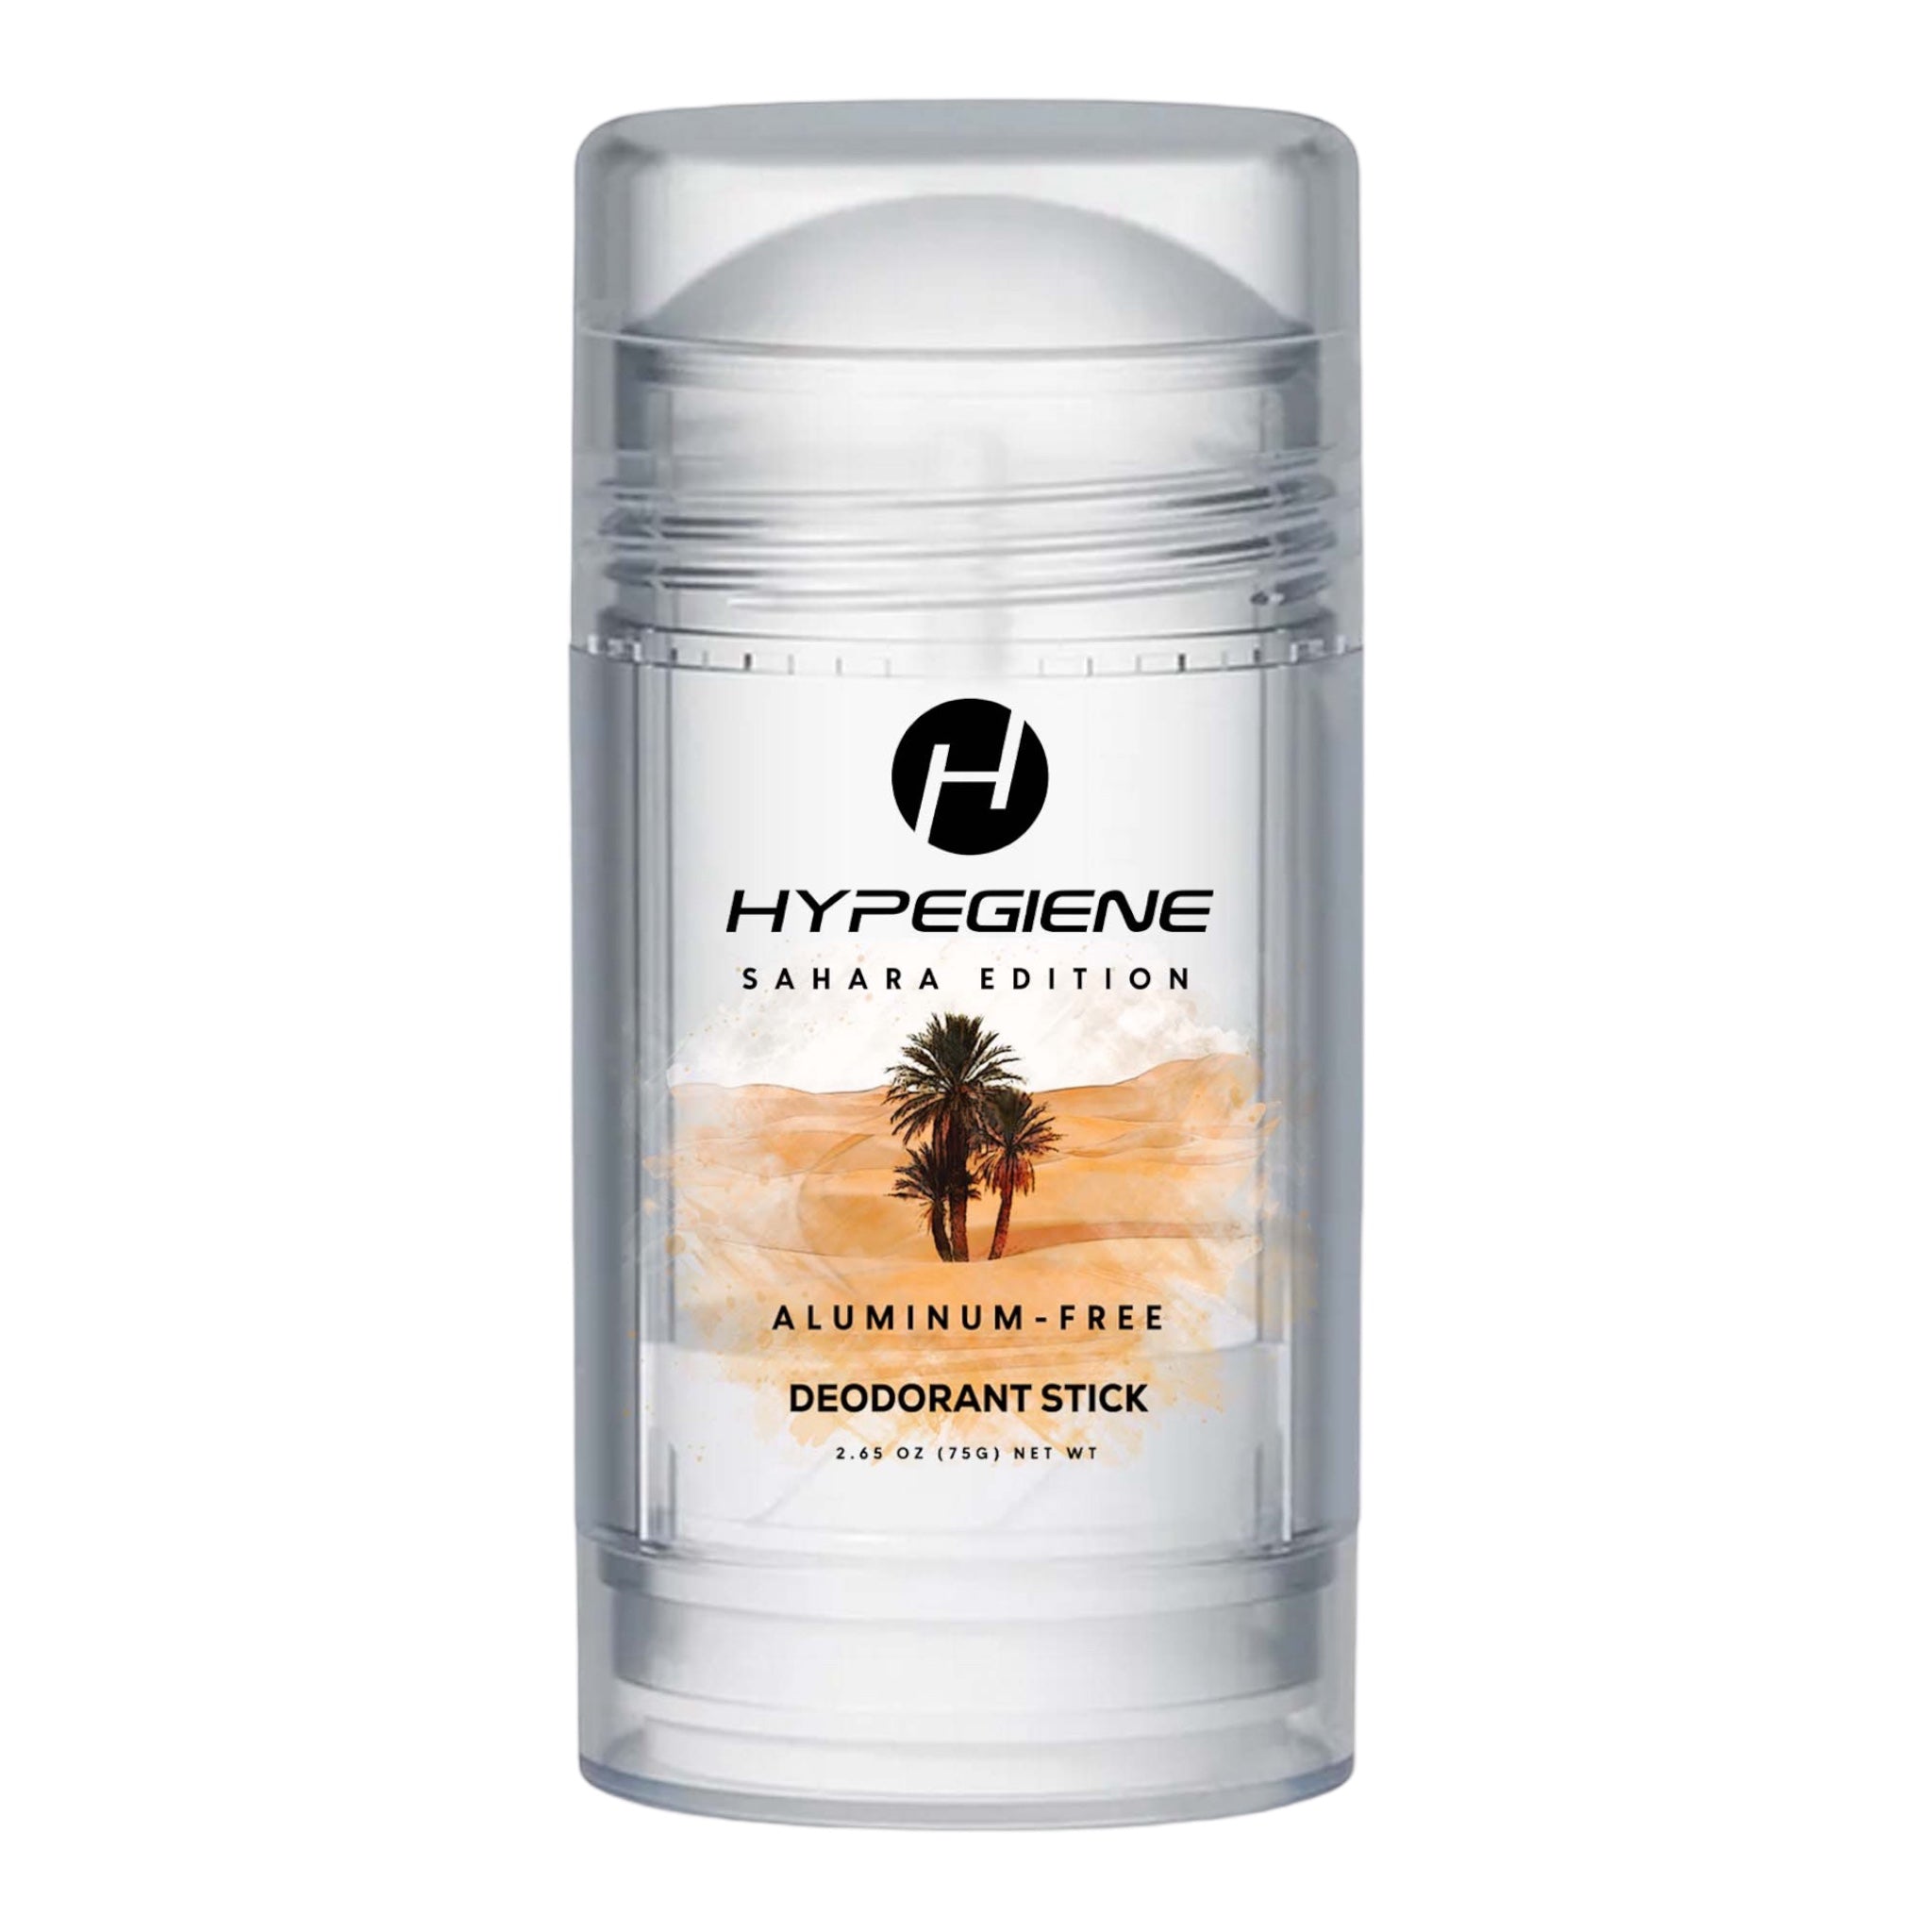 Hypegiene Sahara Edition Deodorant Stick